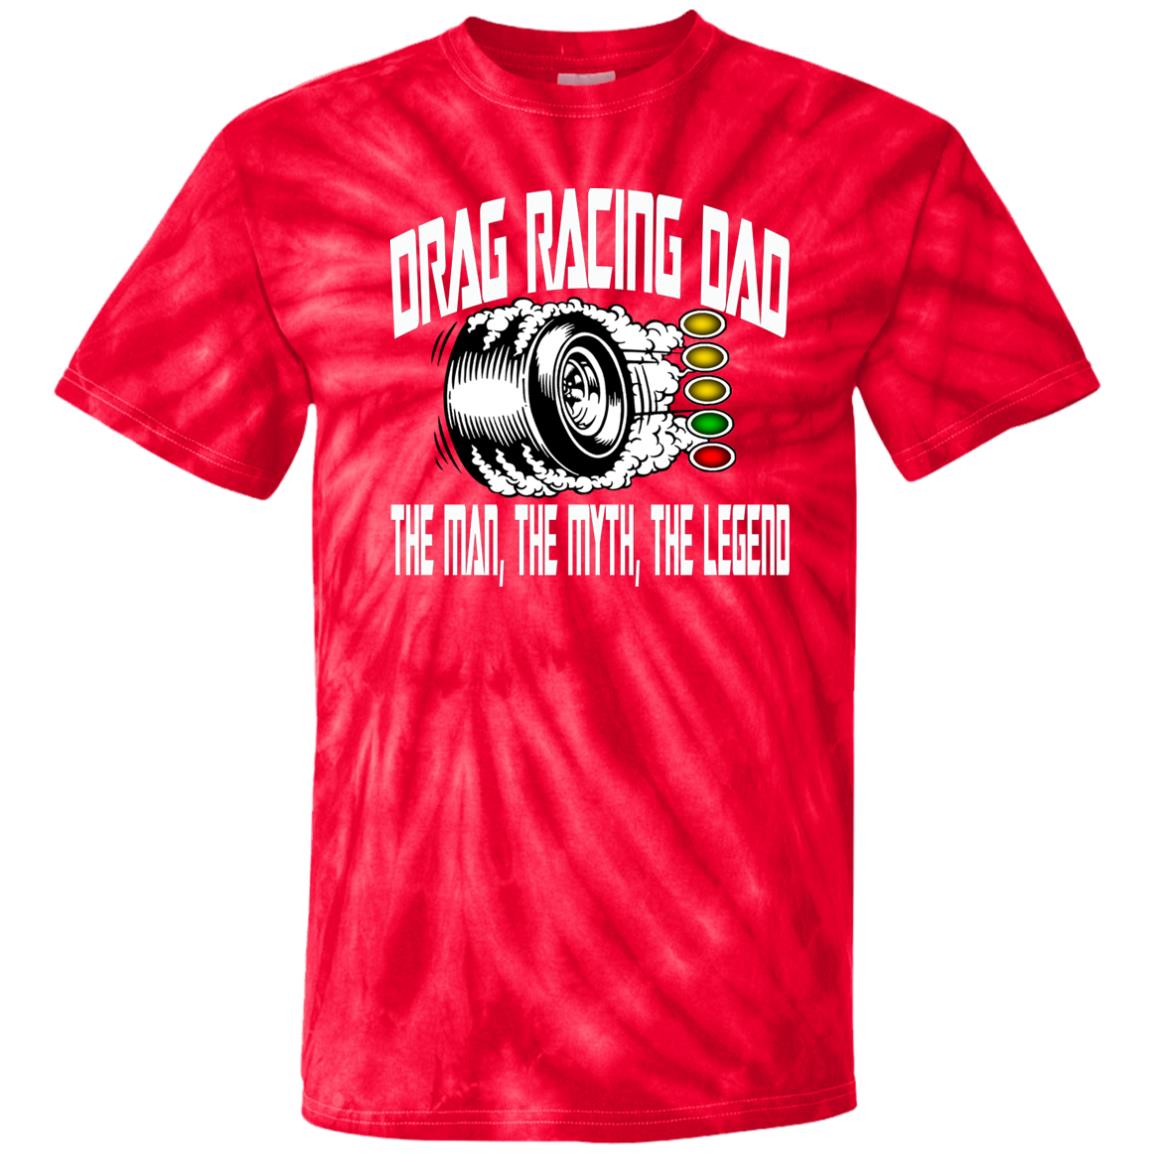 Drag Racing Dad 100% Cotton Tie Dye T-Shirt